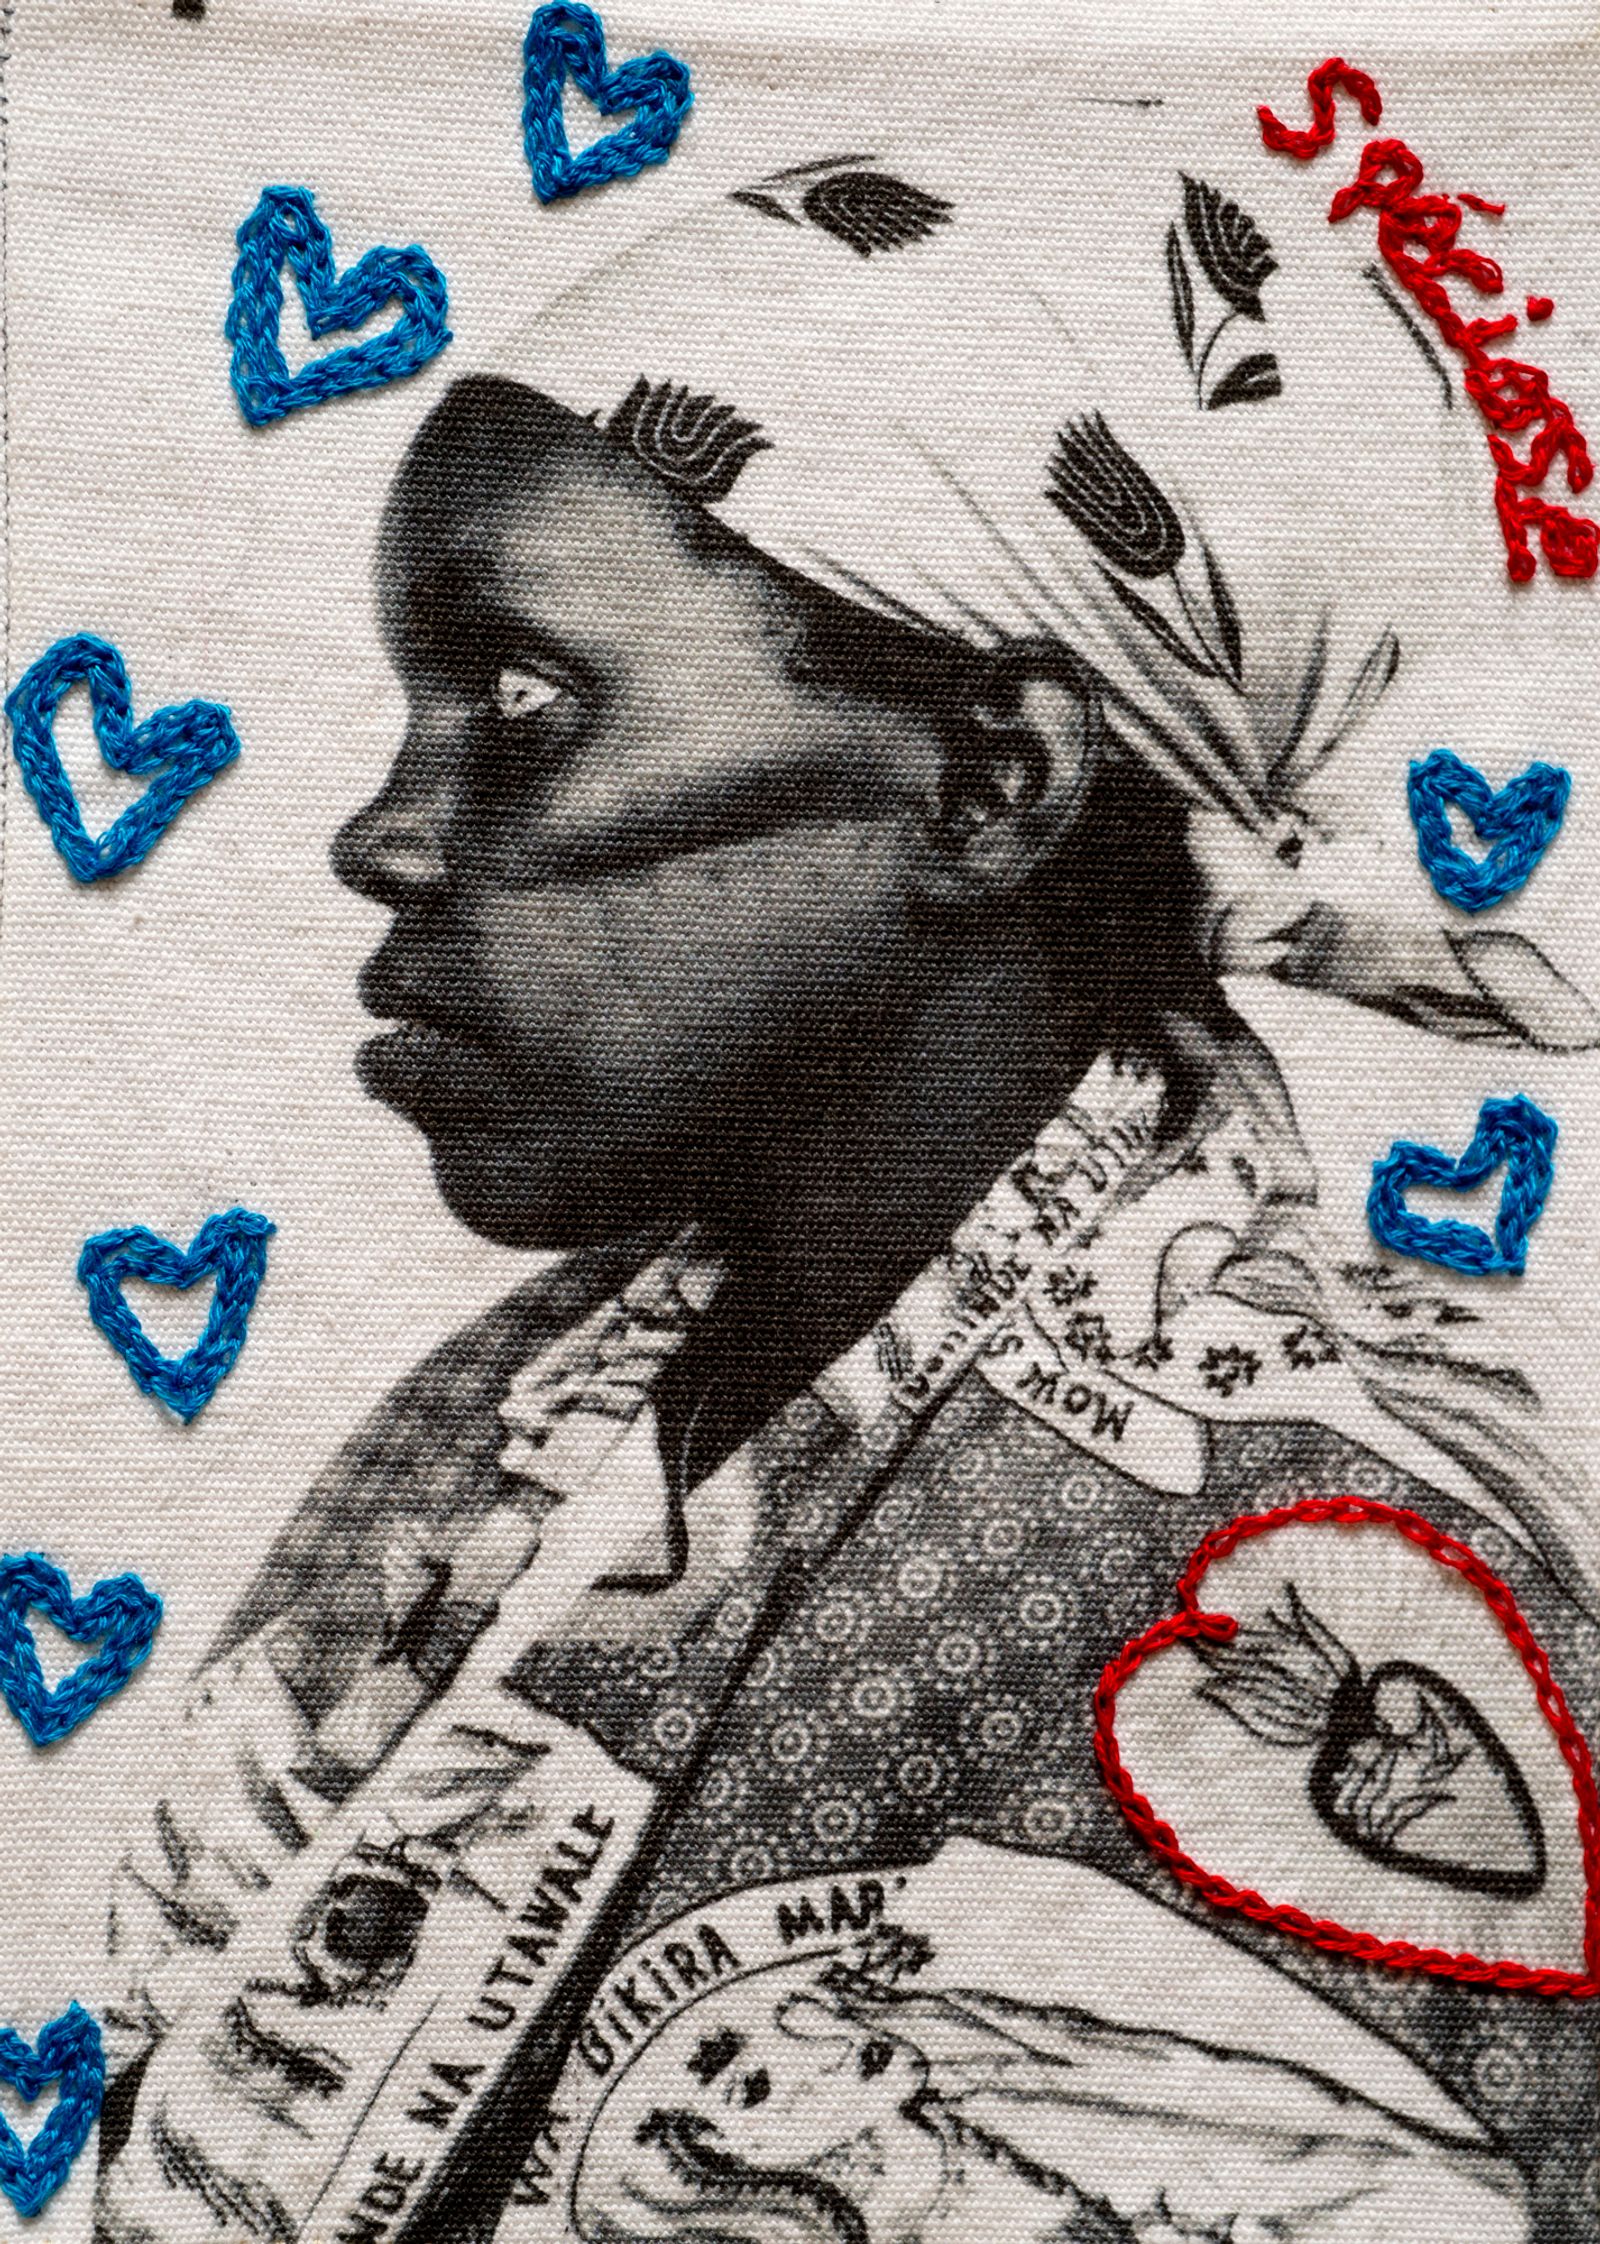 © Jennifer Matthews - Rwanda hanging detail - Speciose, genocide widow